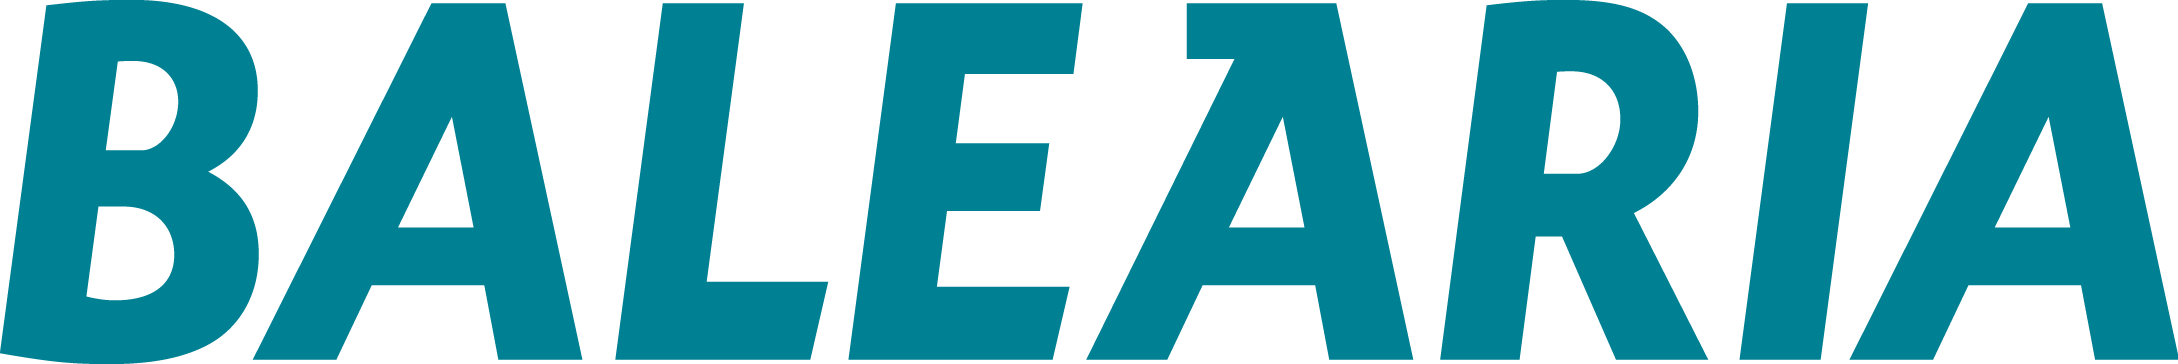 balearia-logo